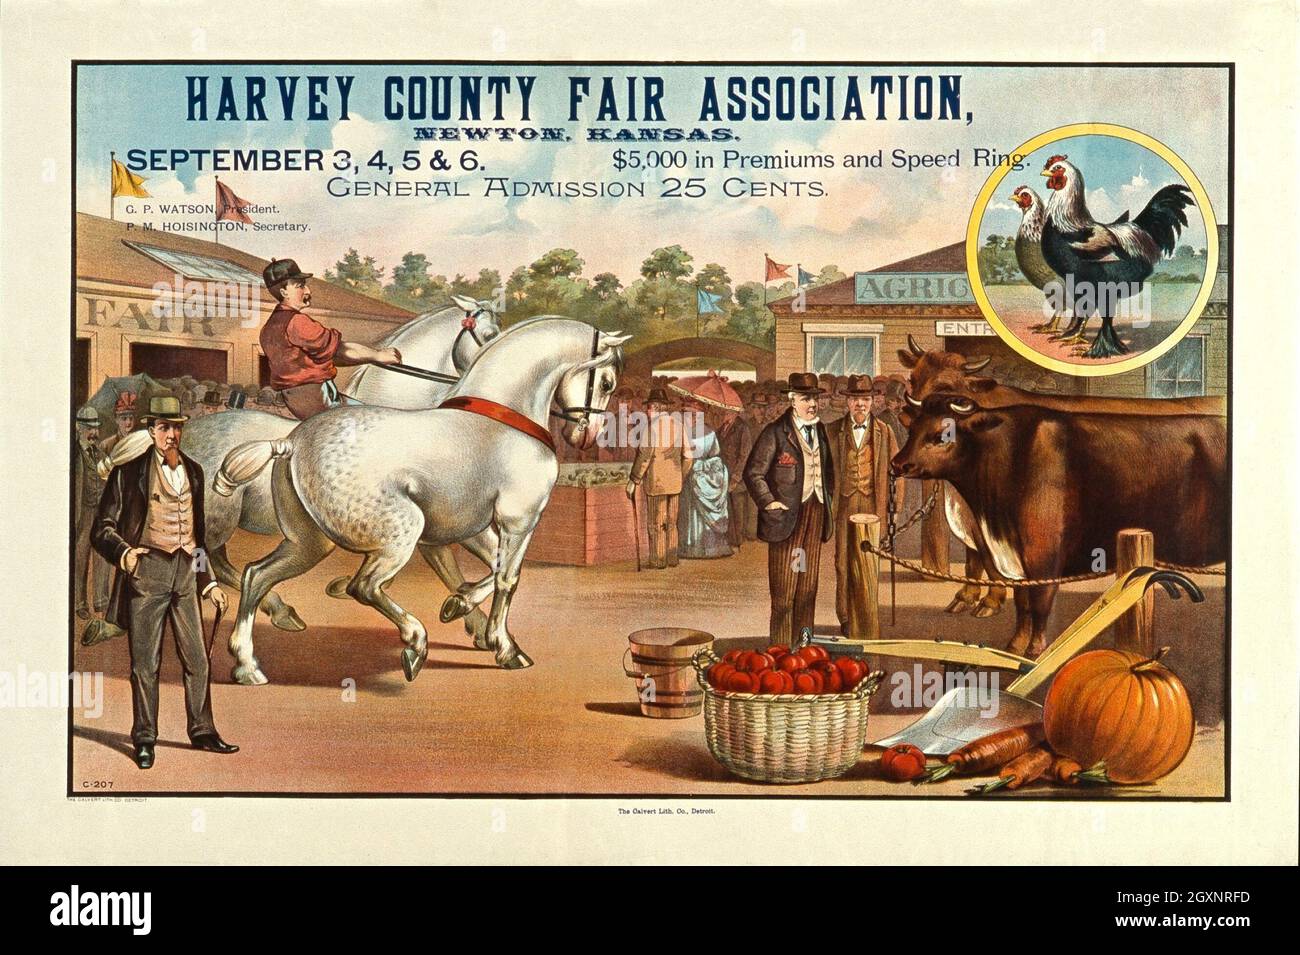 Harvey County Fair Association Stockfoto